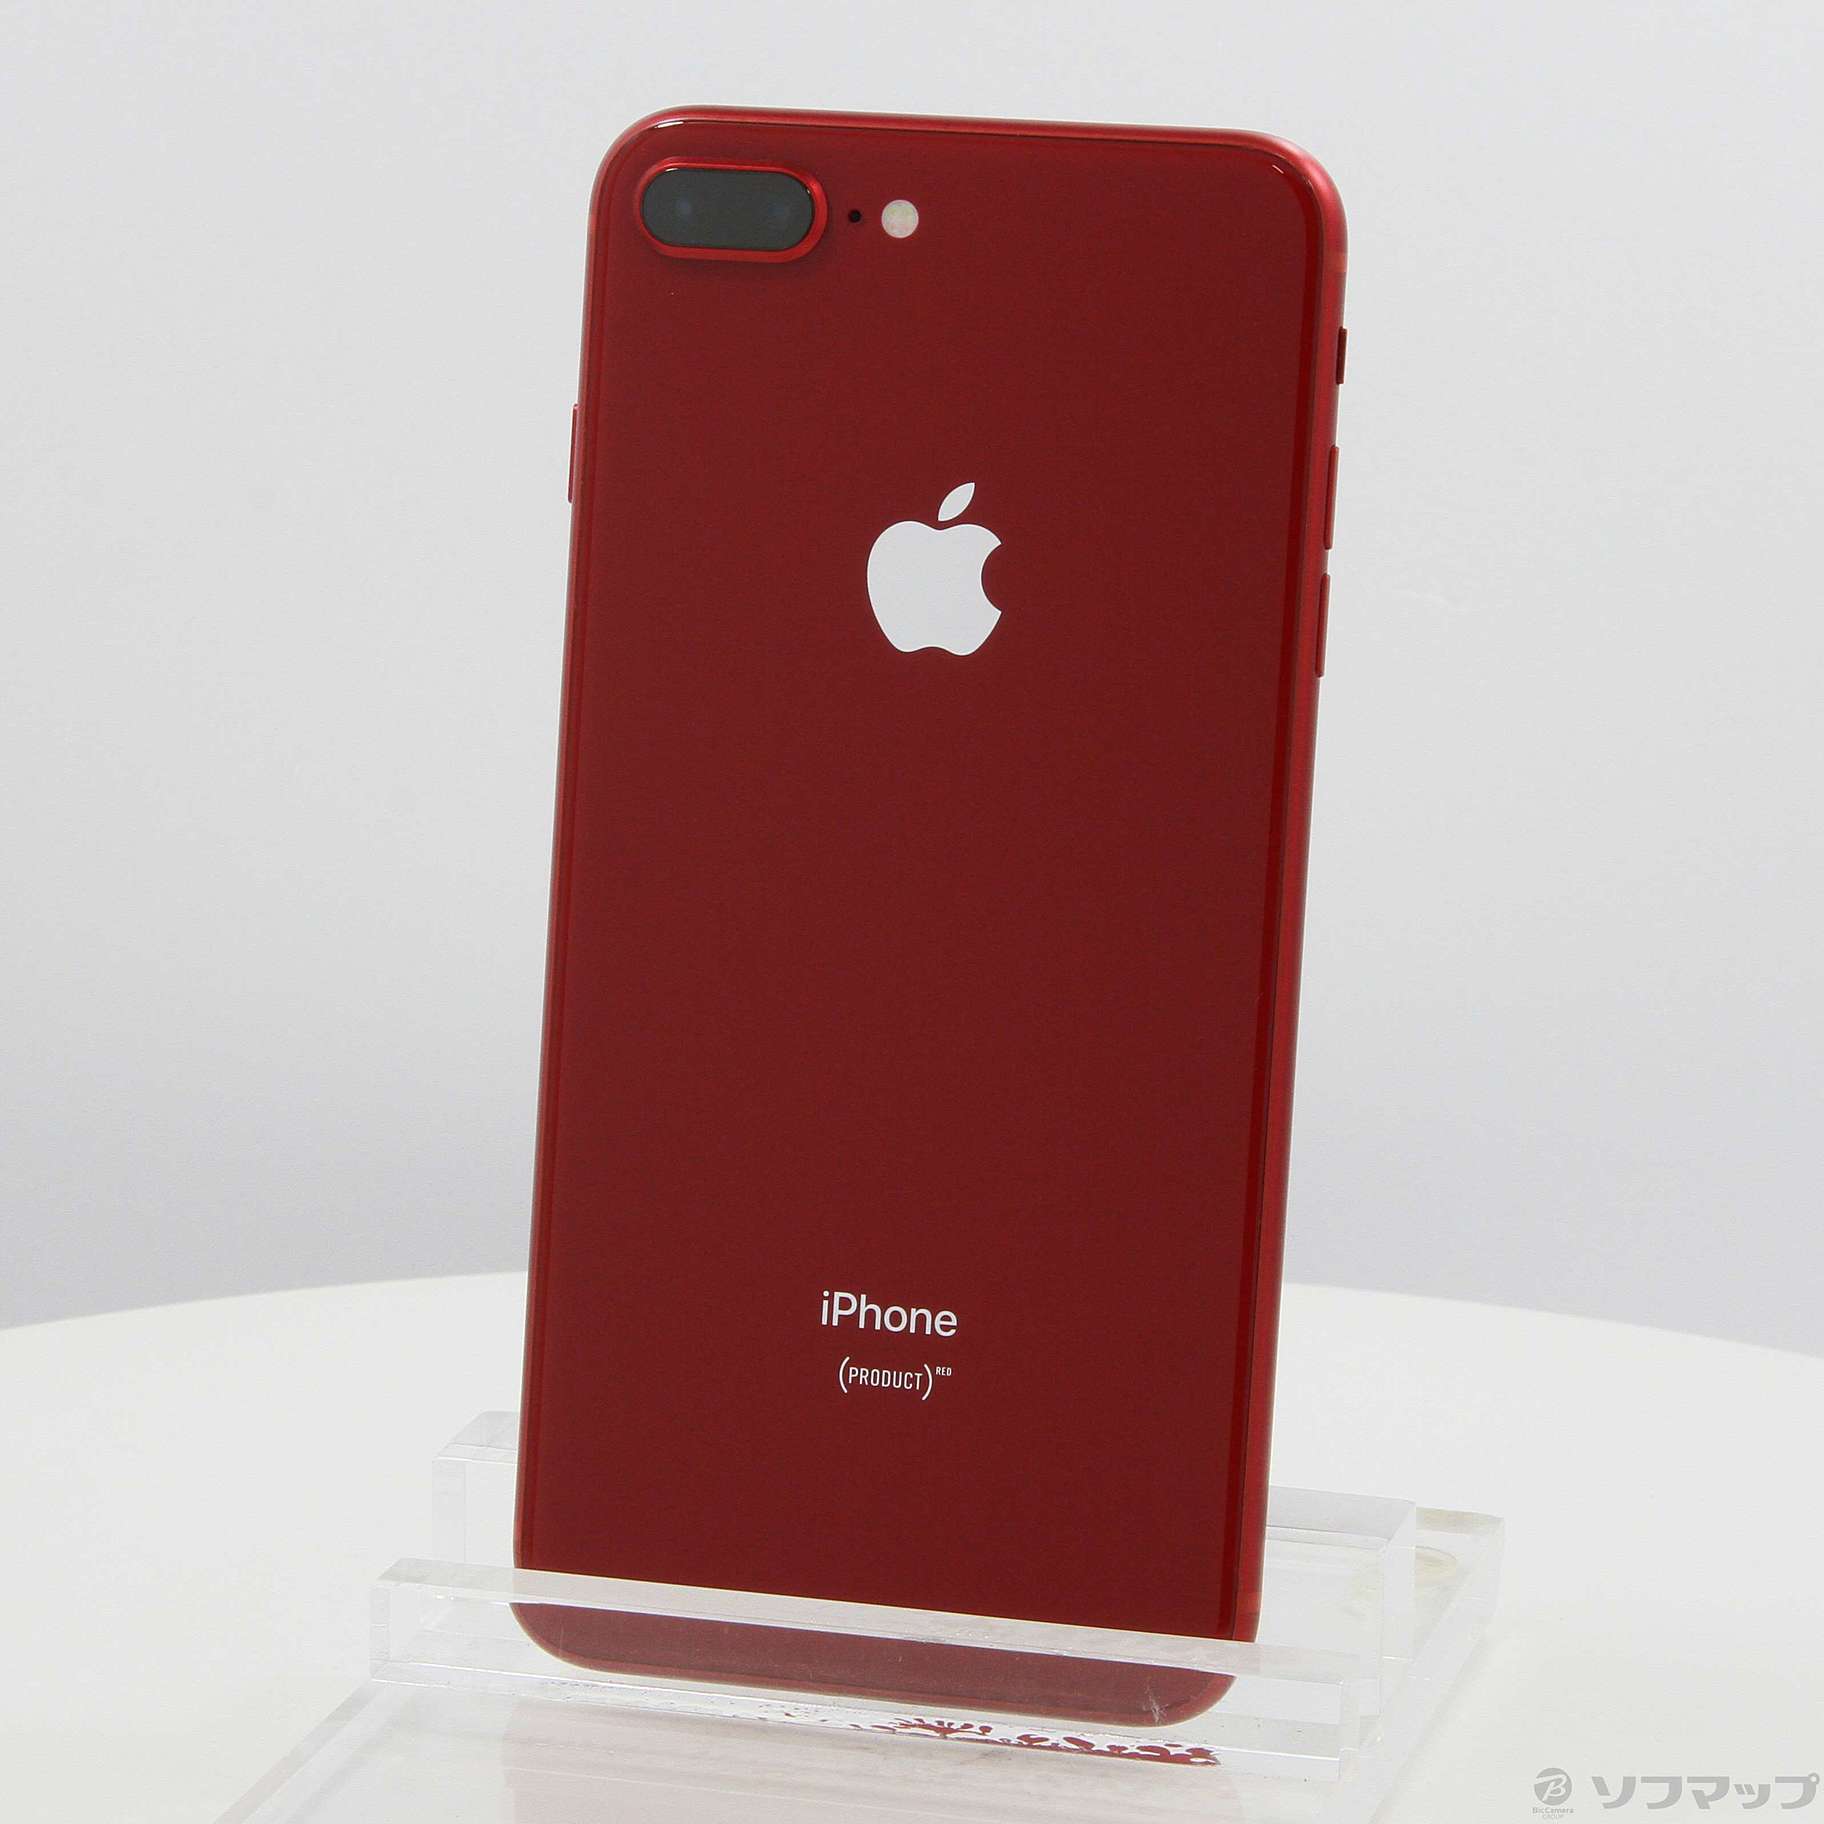 iPhone 8 Product Red 国内simフリー版-